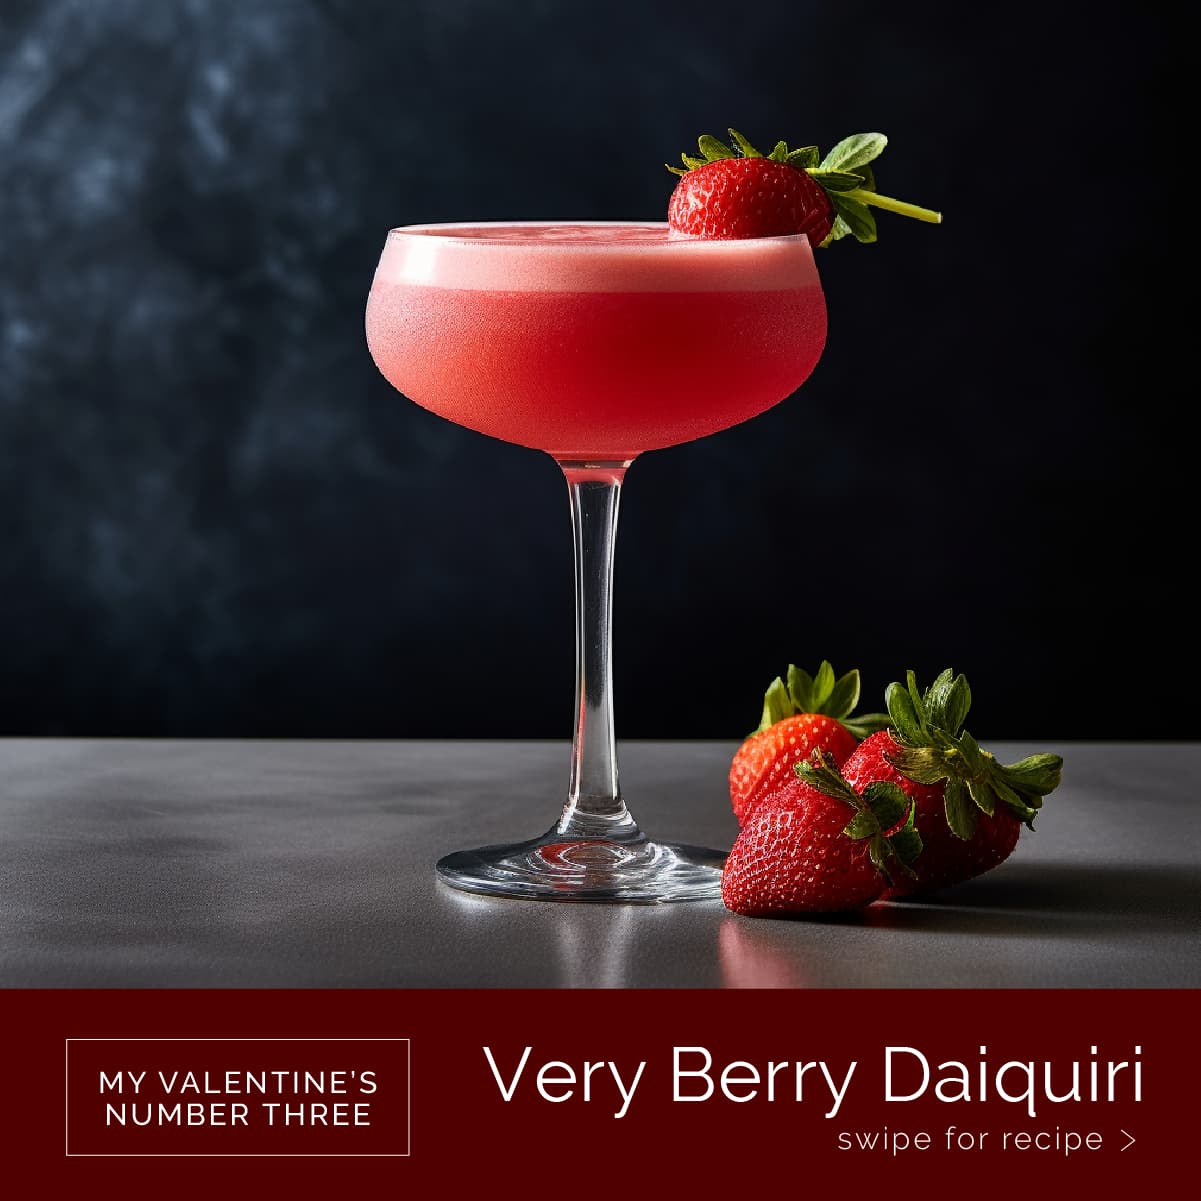 A Very Berry Daiquiri cocktail